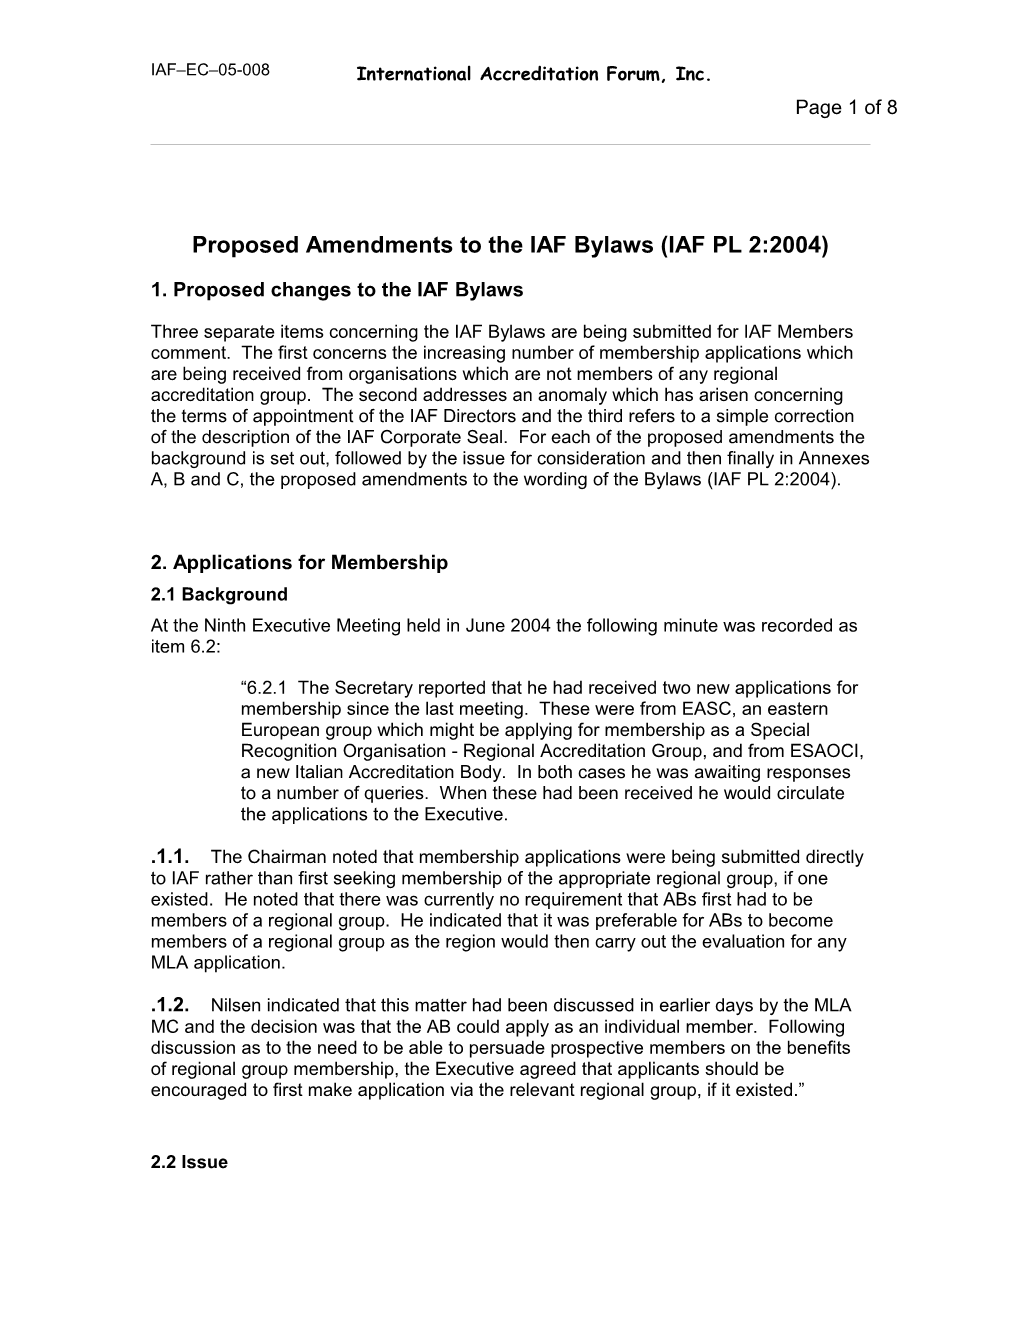 Proposed Amendments to IAF PL 2: 2004 IAF Bylaws